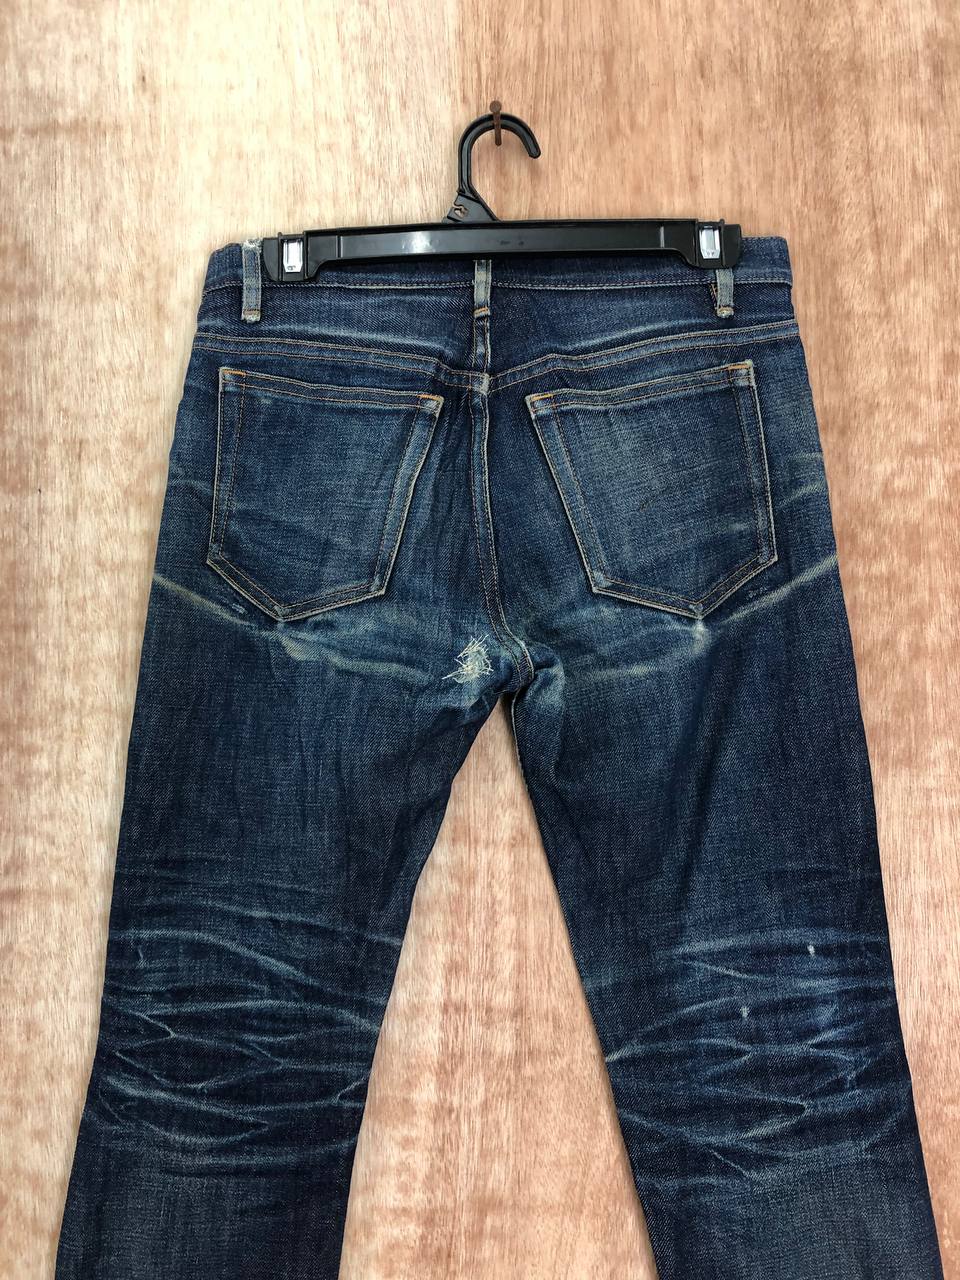 APC Petit Standard Jeans Distressed Selvedge - 13